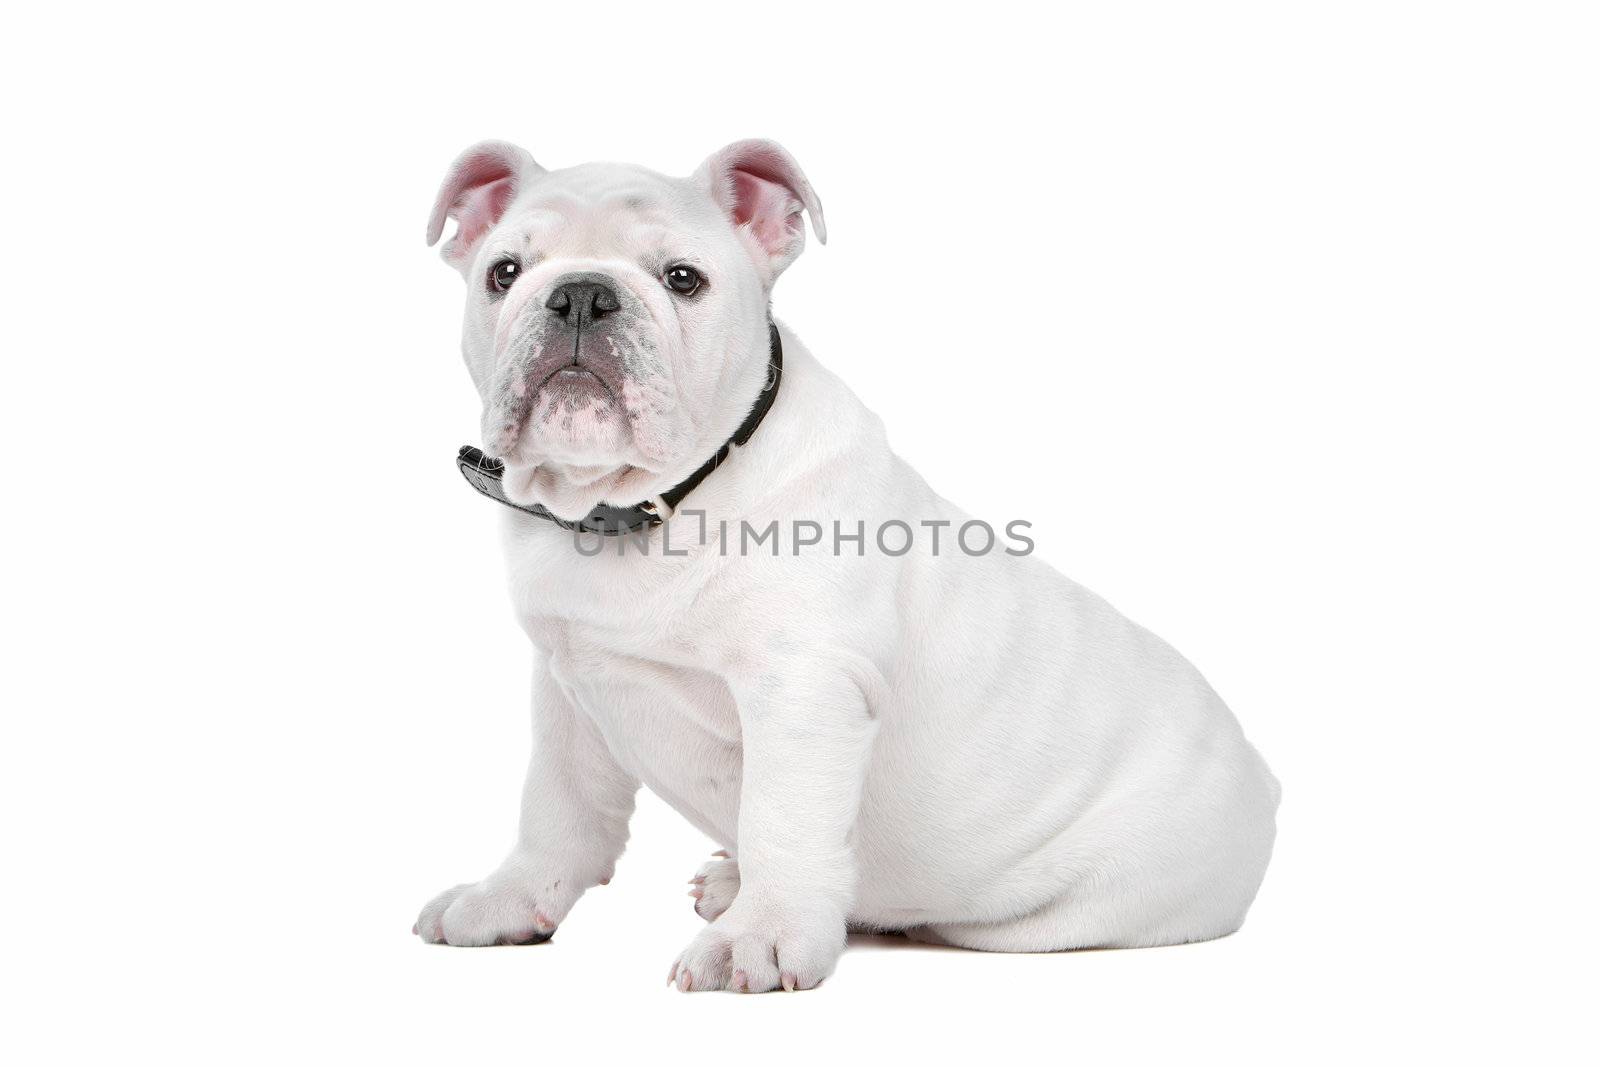 White English bulldog puppy by eriklam